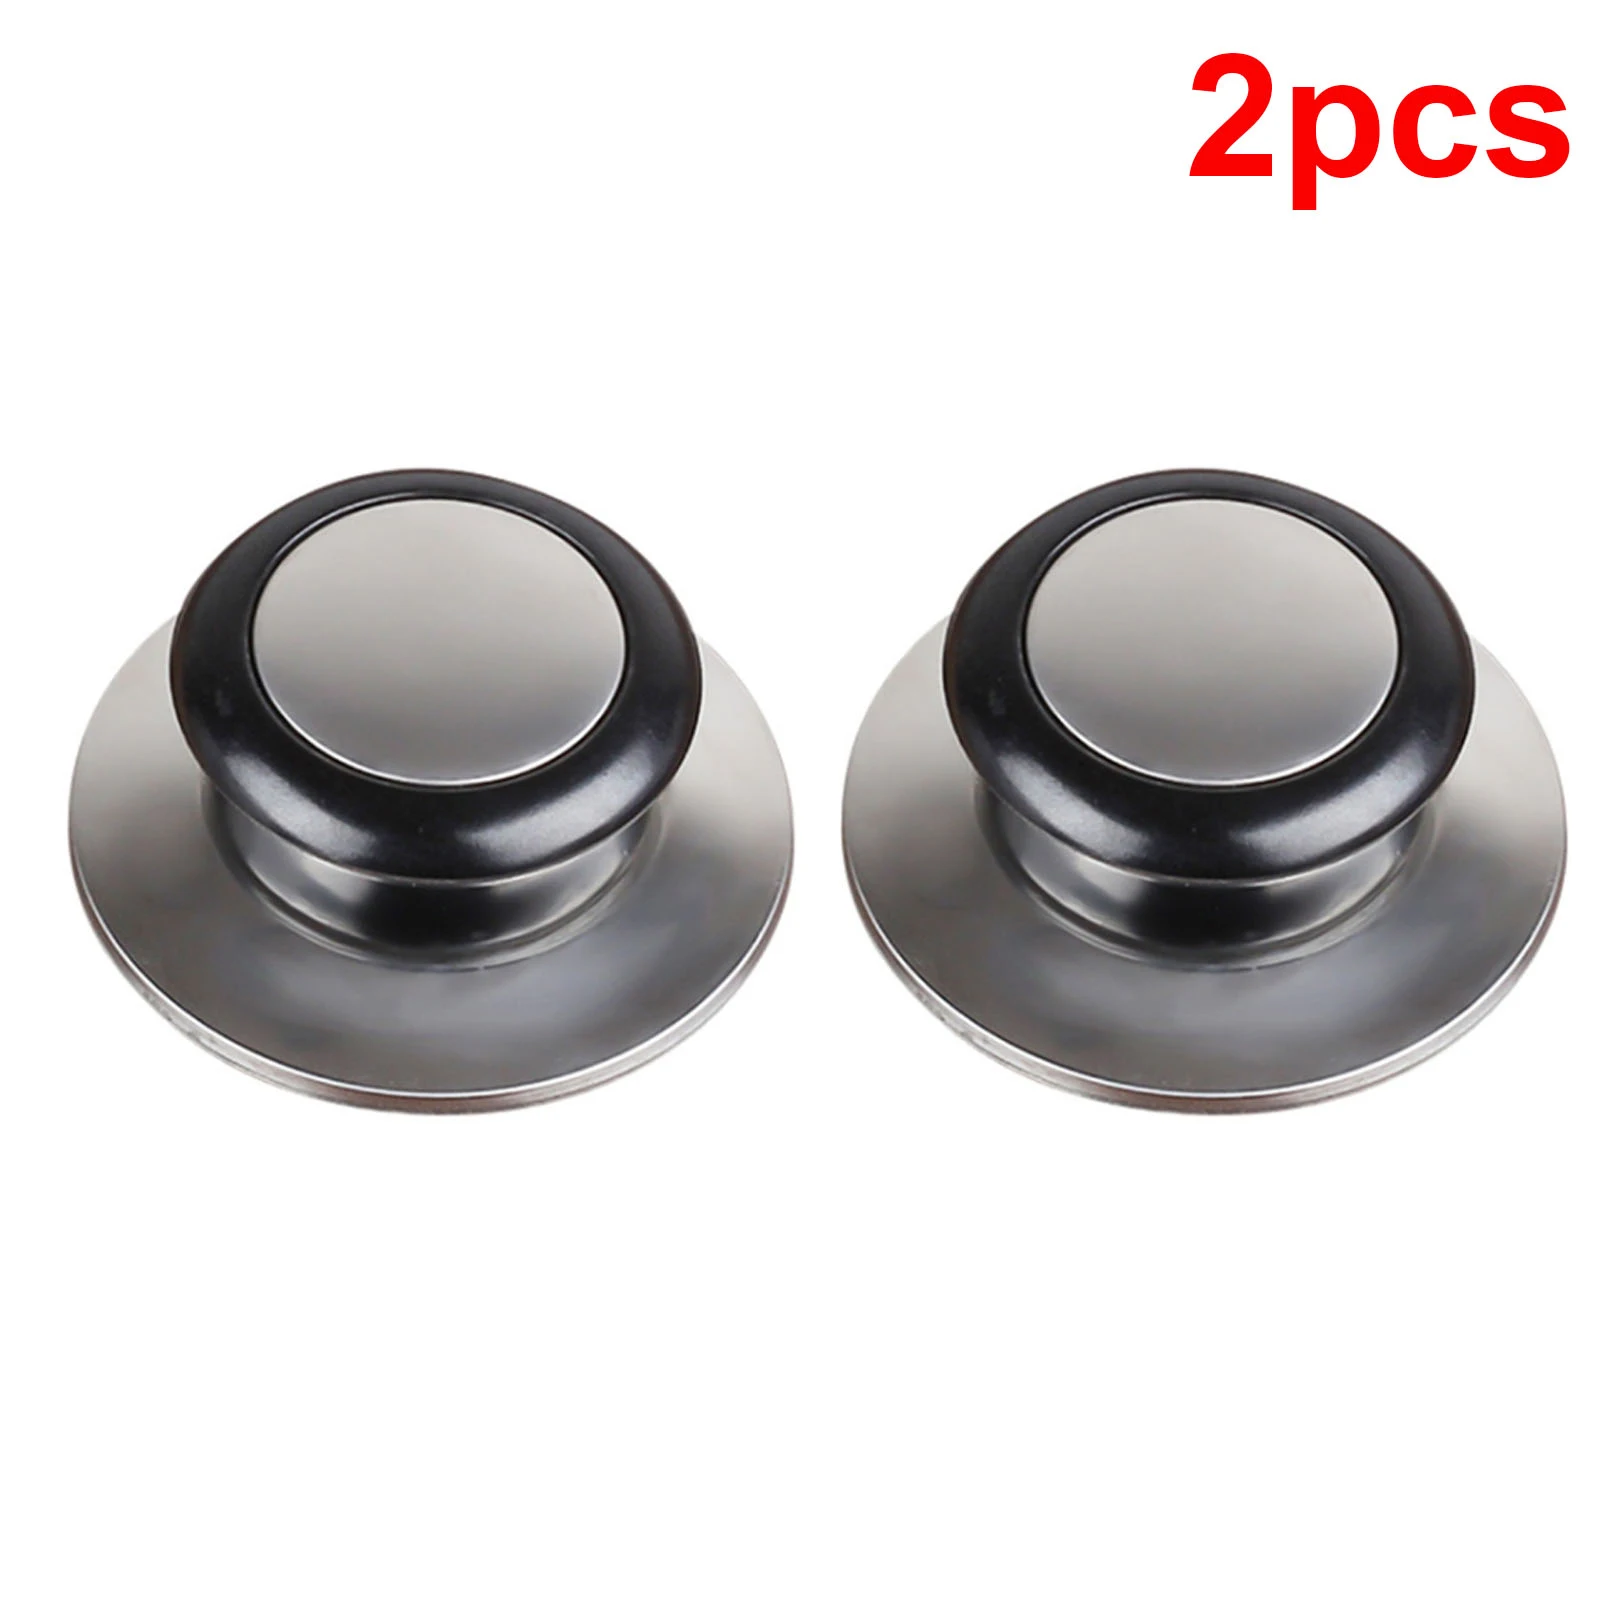 

2pcs Replacement Lifting Handle Universal Pot Lid Holding Handle Glass Lib Cover Knob Cap For Kitchen Cookware Handgrip